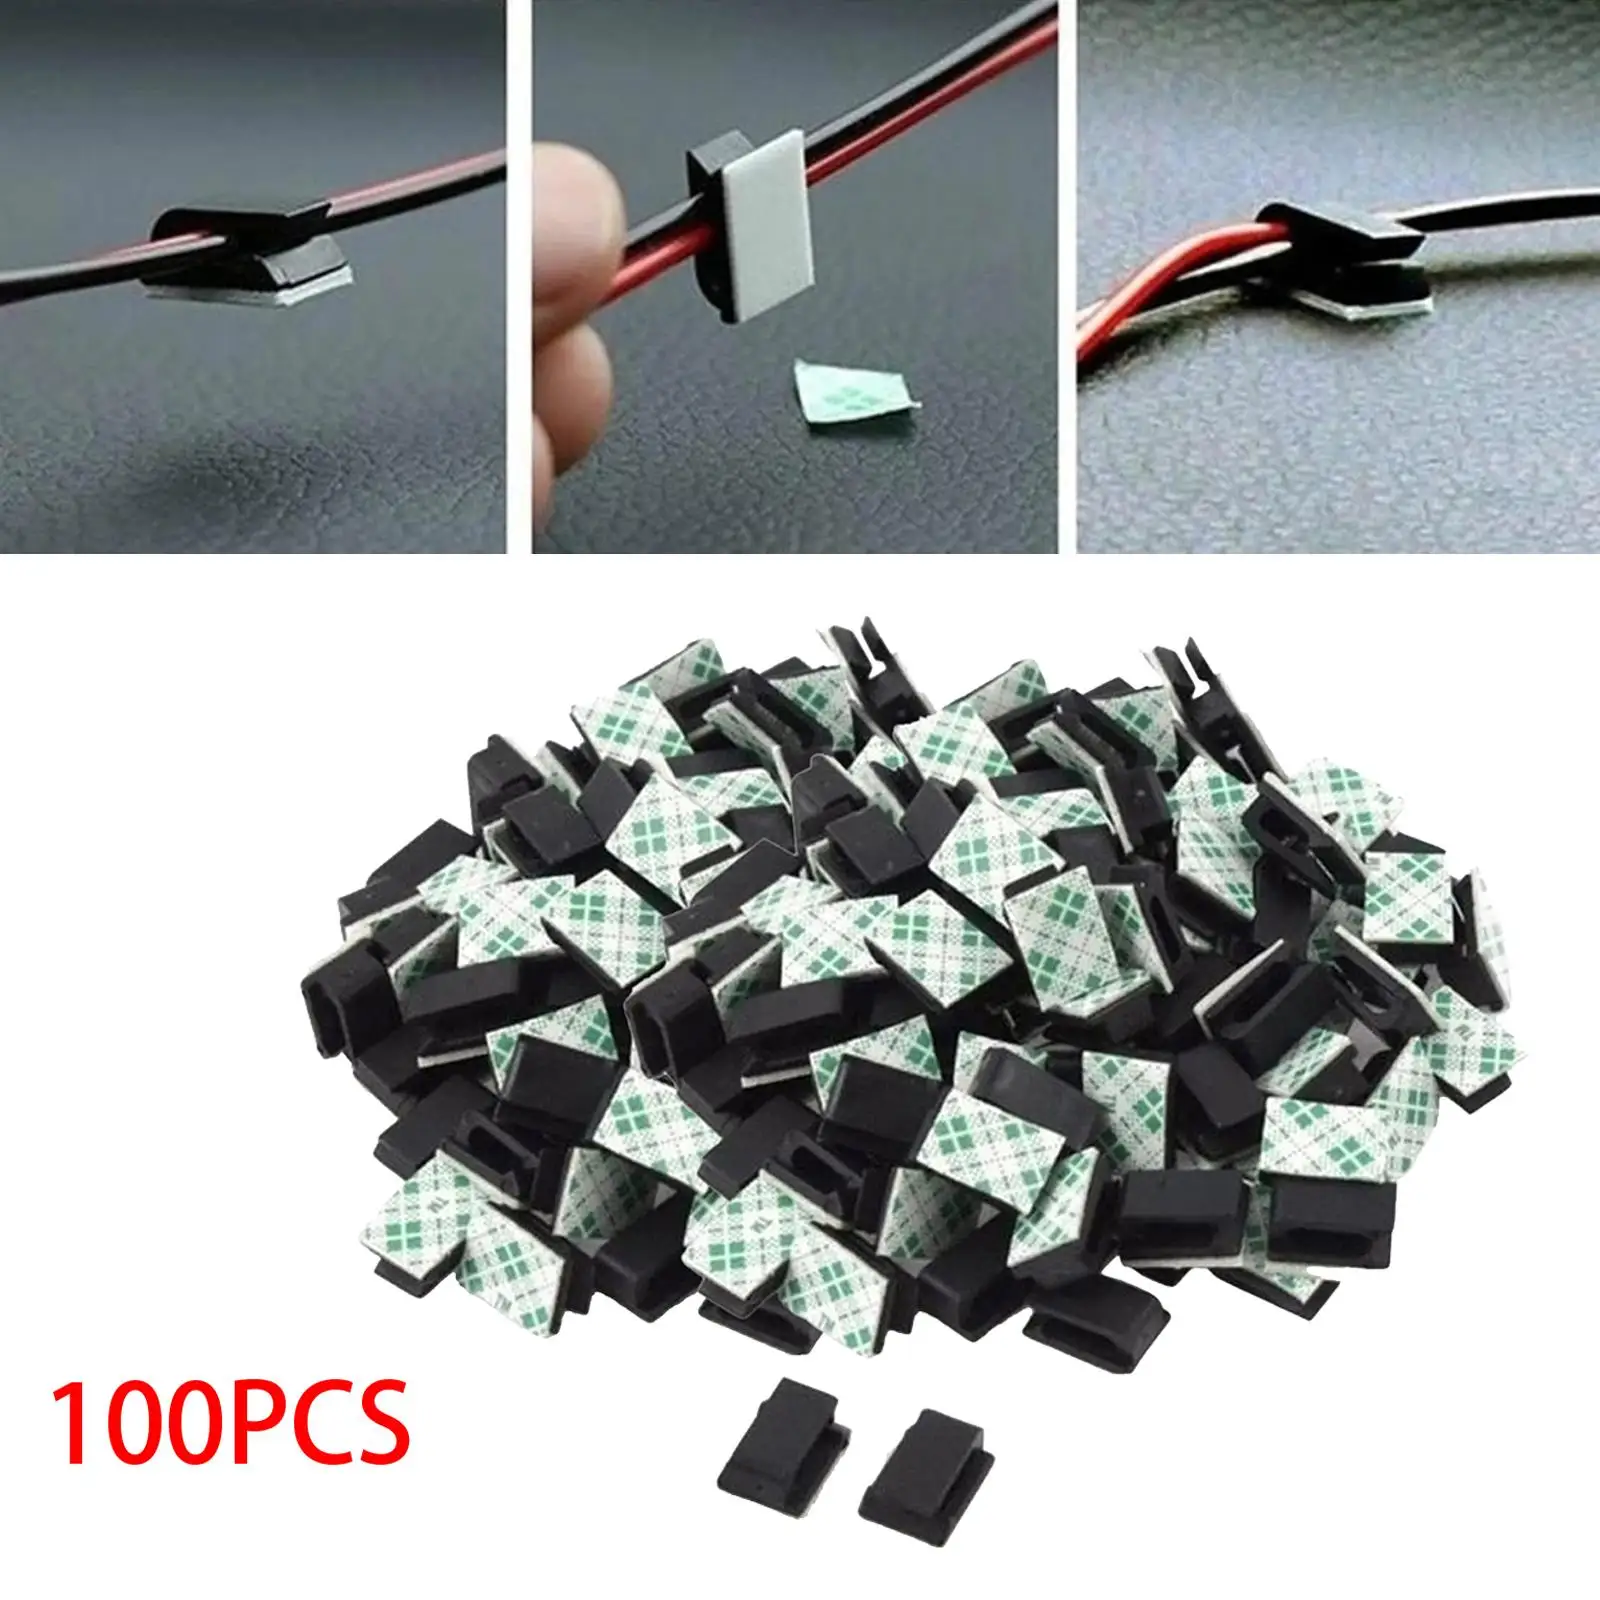 100 Pieces Self Adhesive Cable Clips Clip Durable Portable Tools Bundler Home Under Desk Car Kitchen Dresser